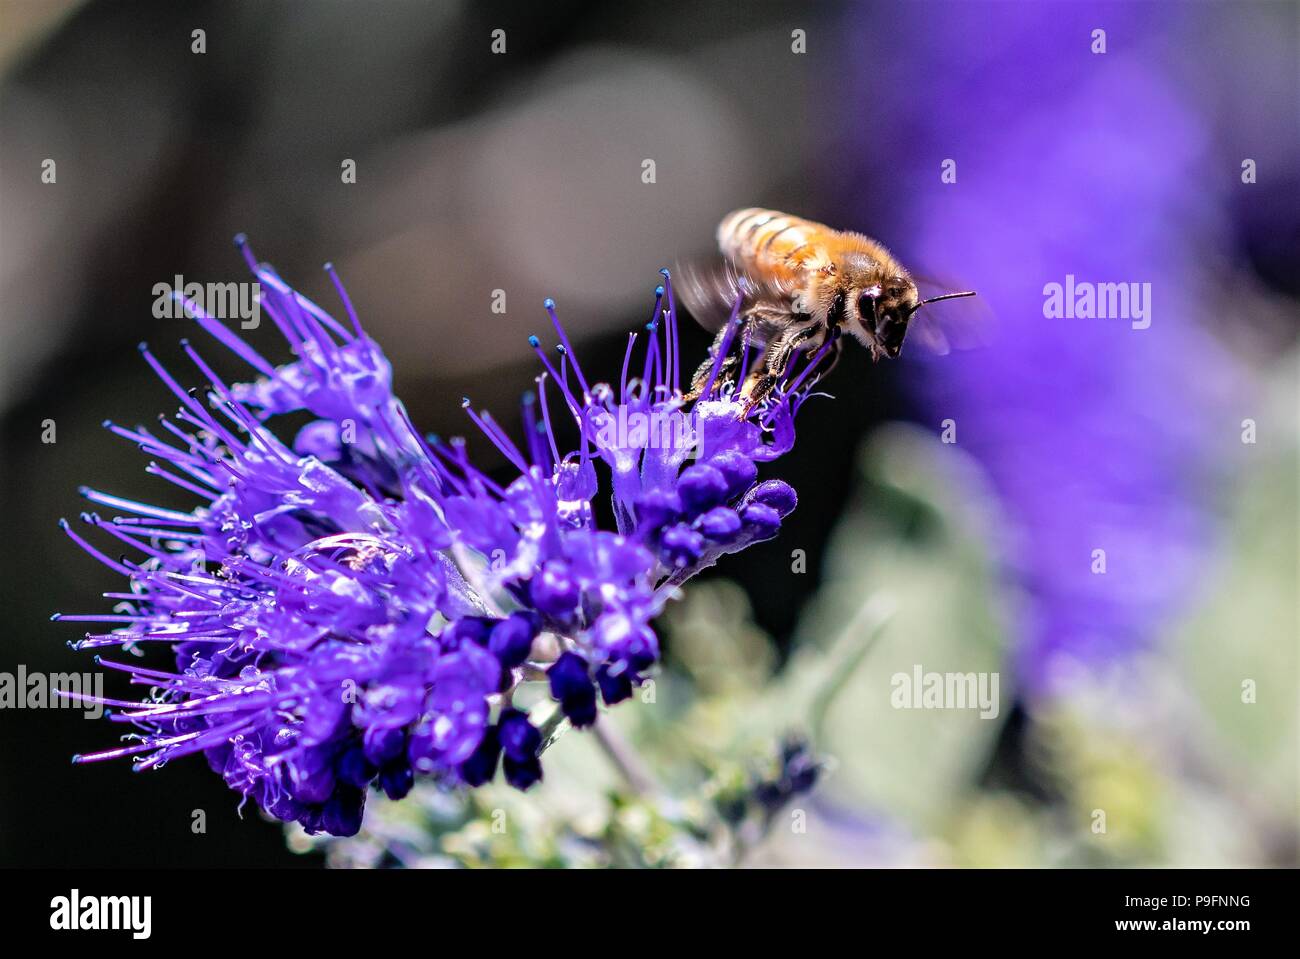 Honey bees on purple flowers Stock Photo